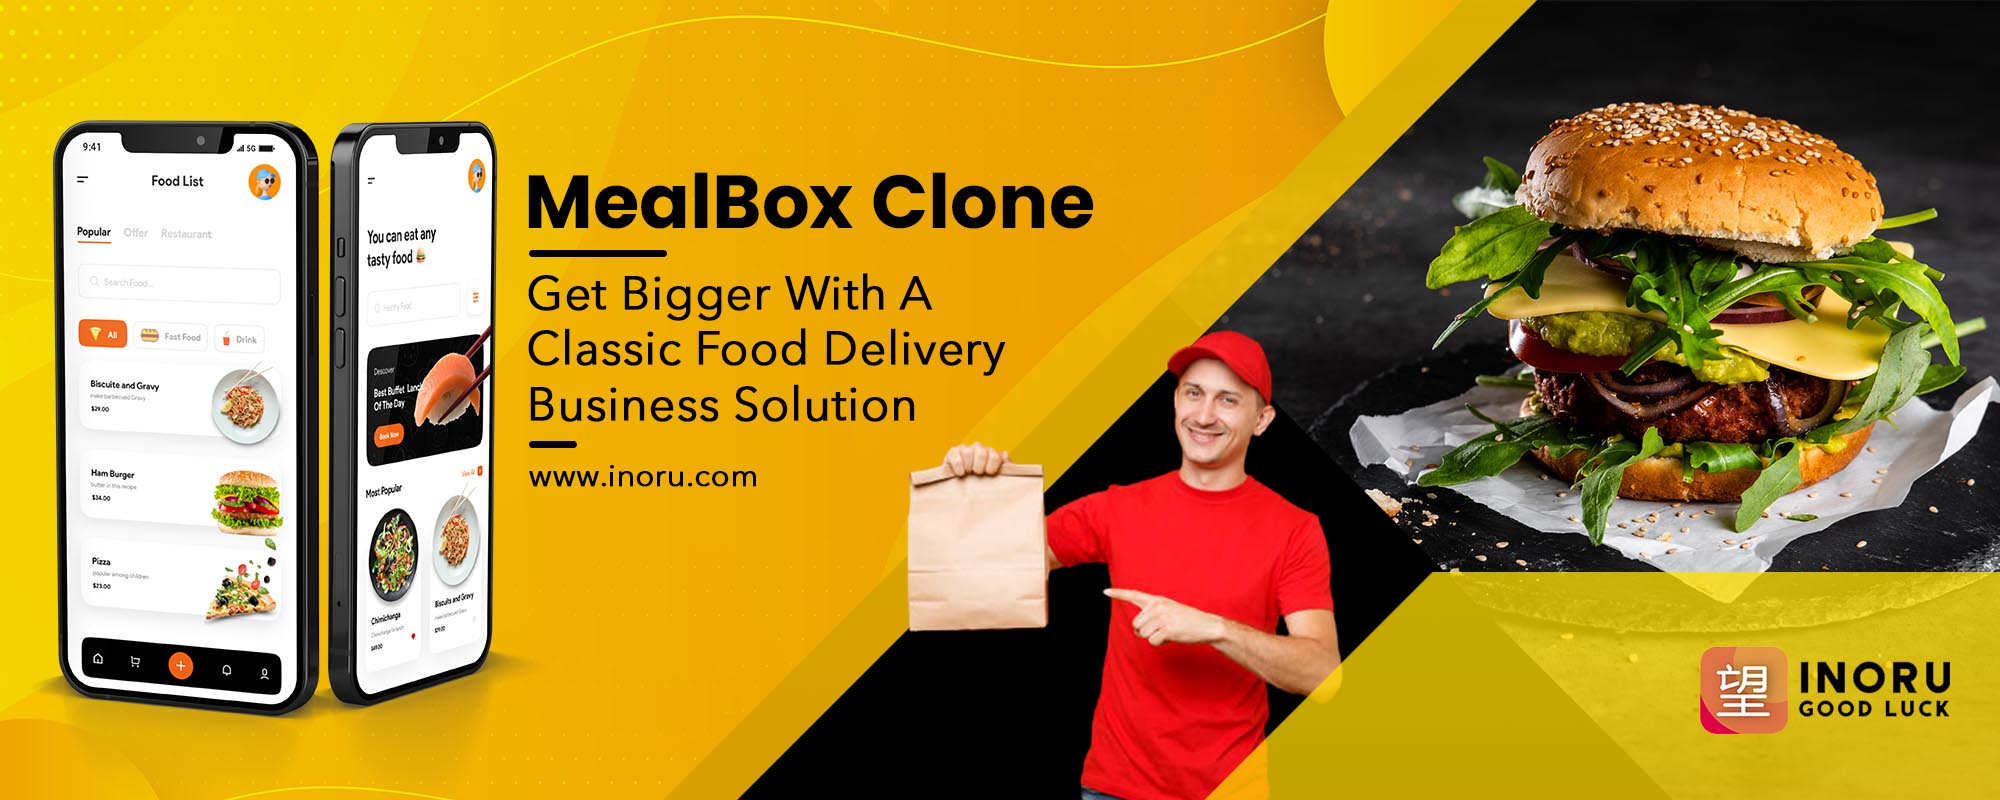 MealBox Clone